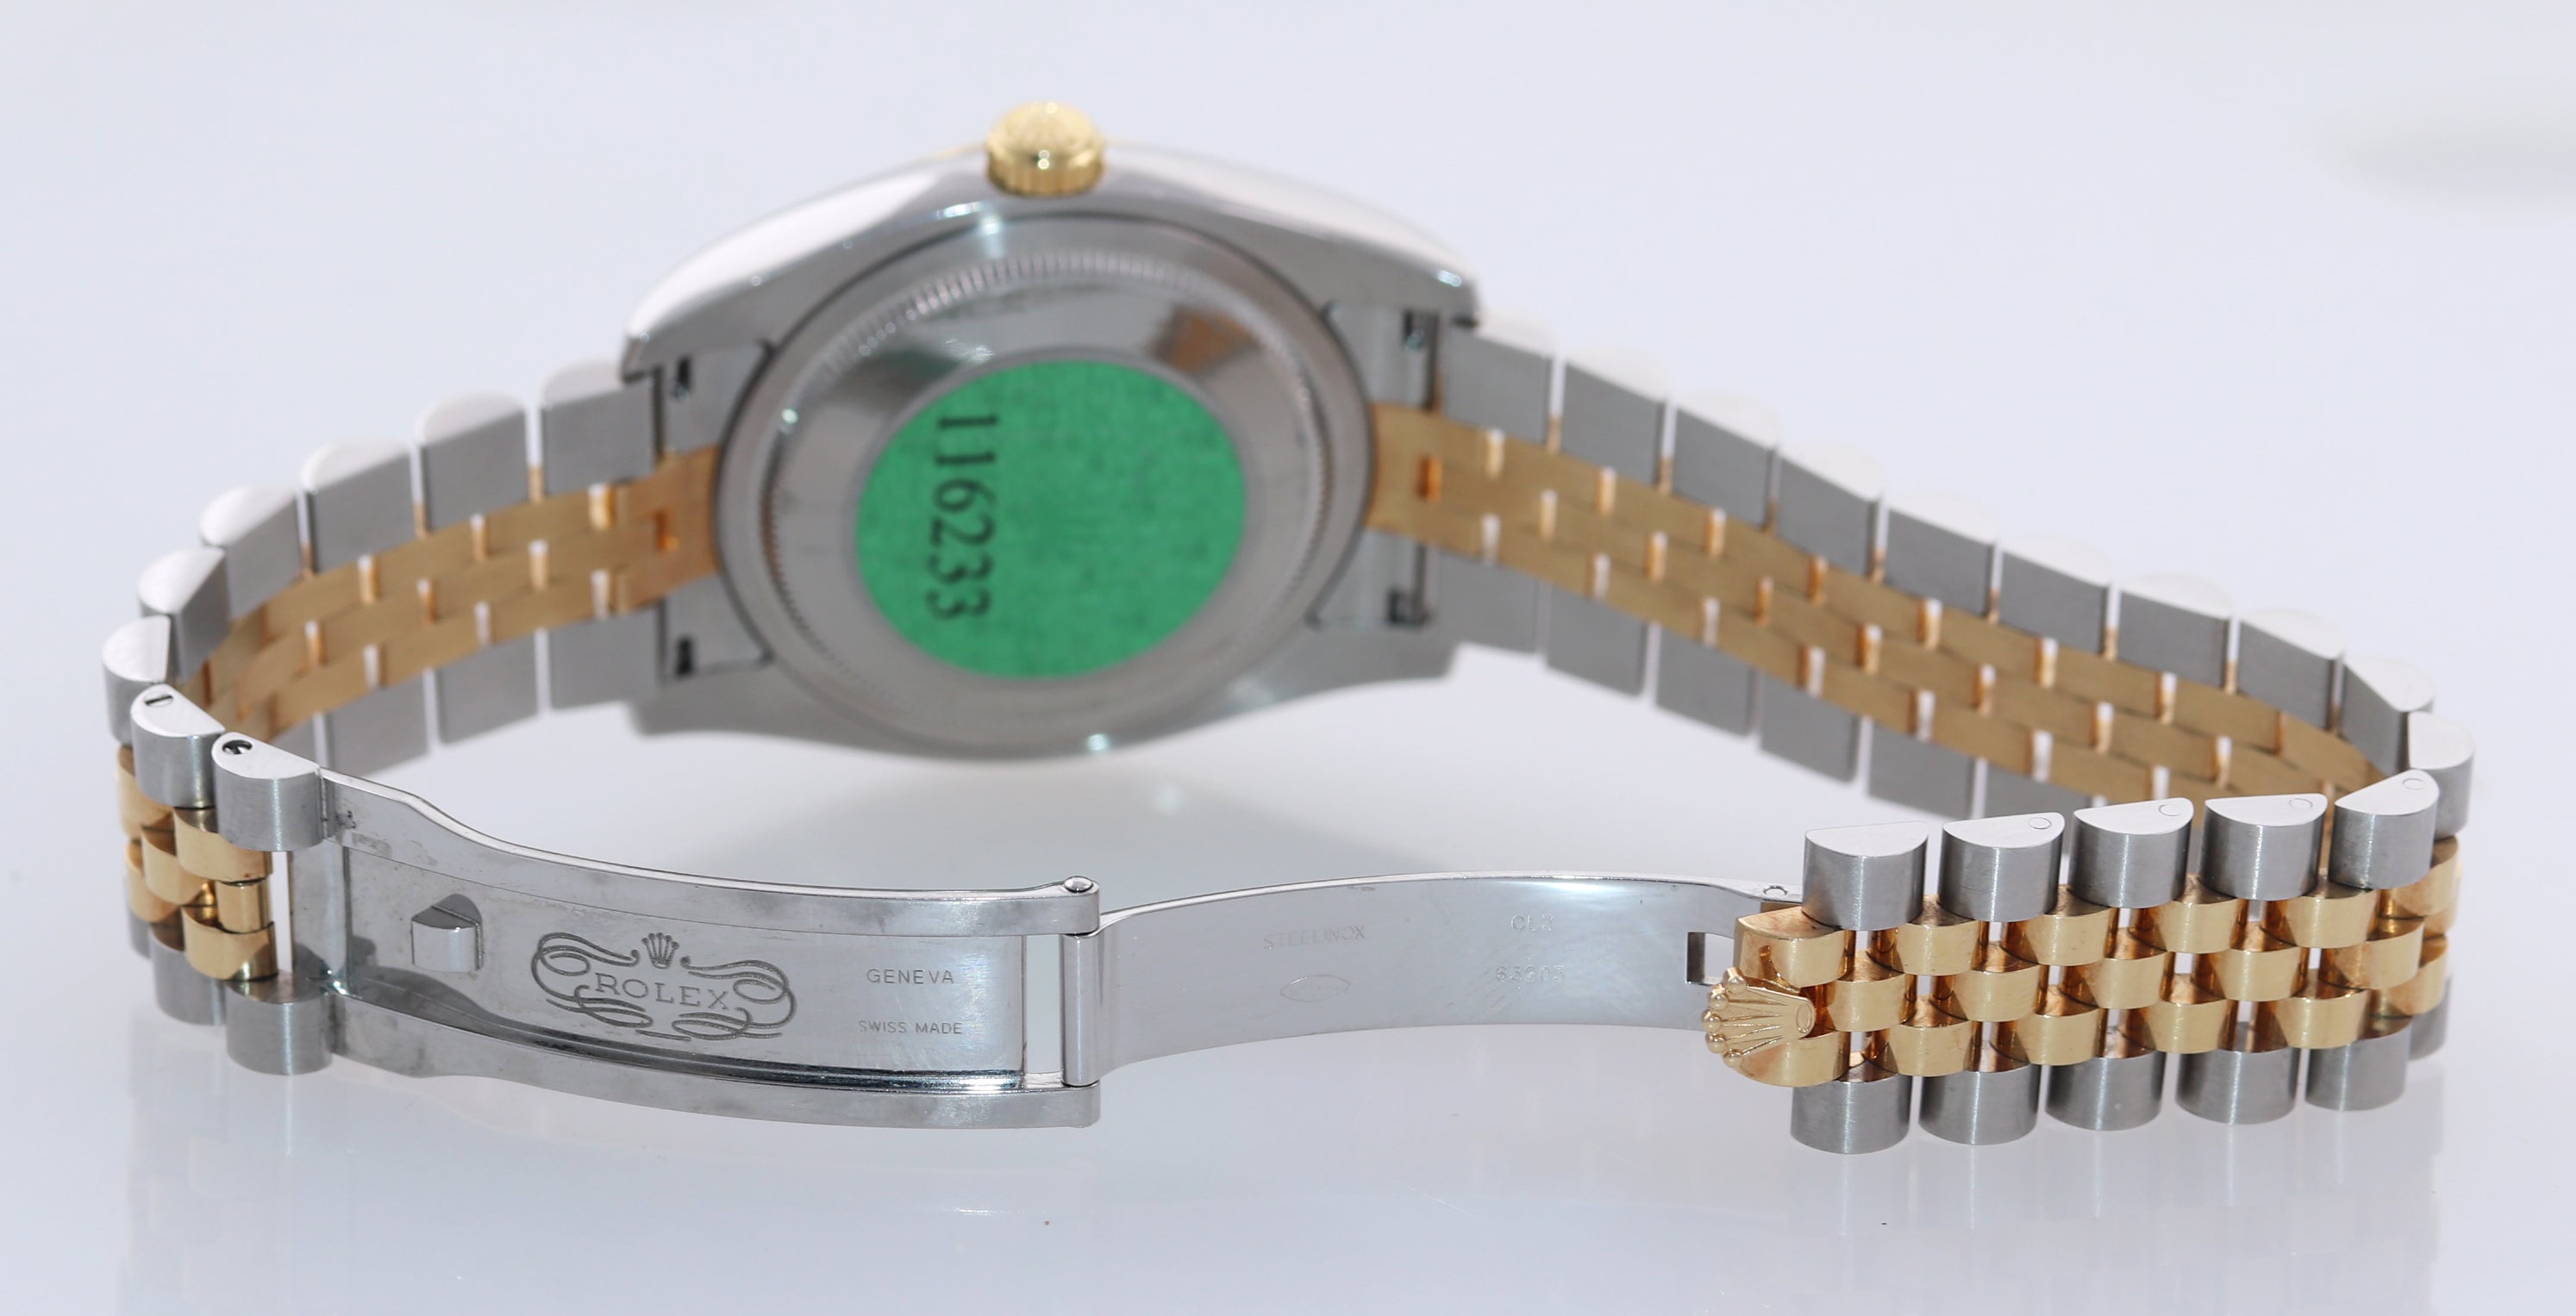 MINT PAPERS Rolex DateJust Jubilee 36mm MOP Roman 116233 18k Yellow Gold Watch